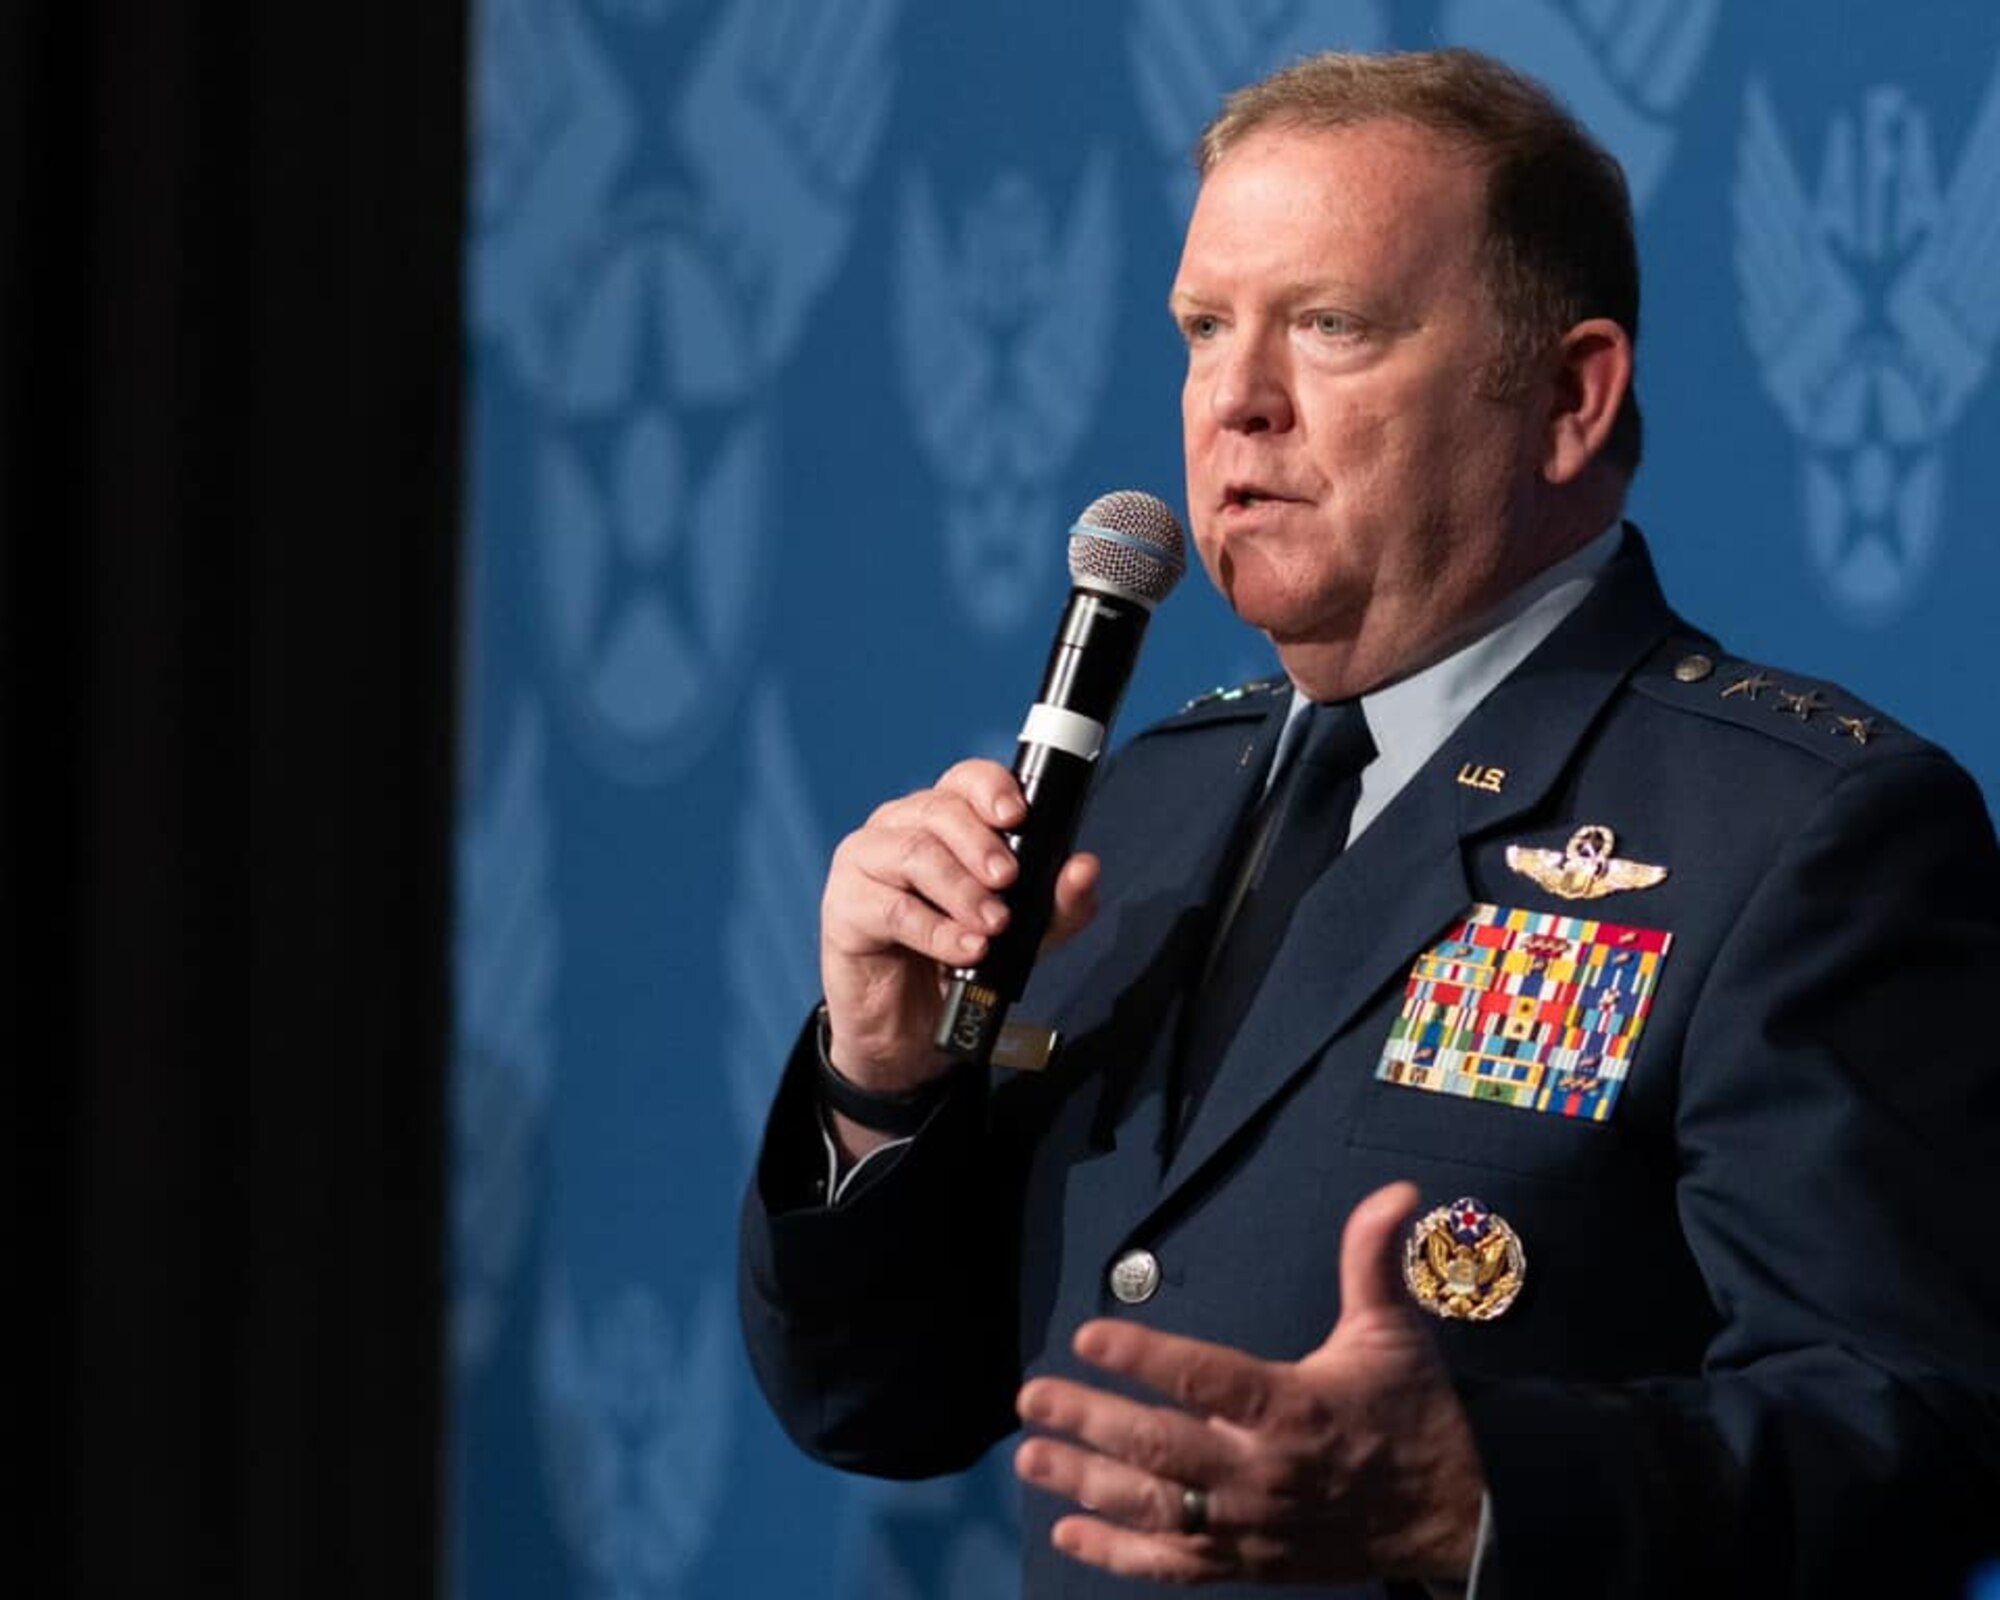 Air Force Reserve commander Lt. Gen Richard Scobee speaks into a microphone.